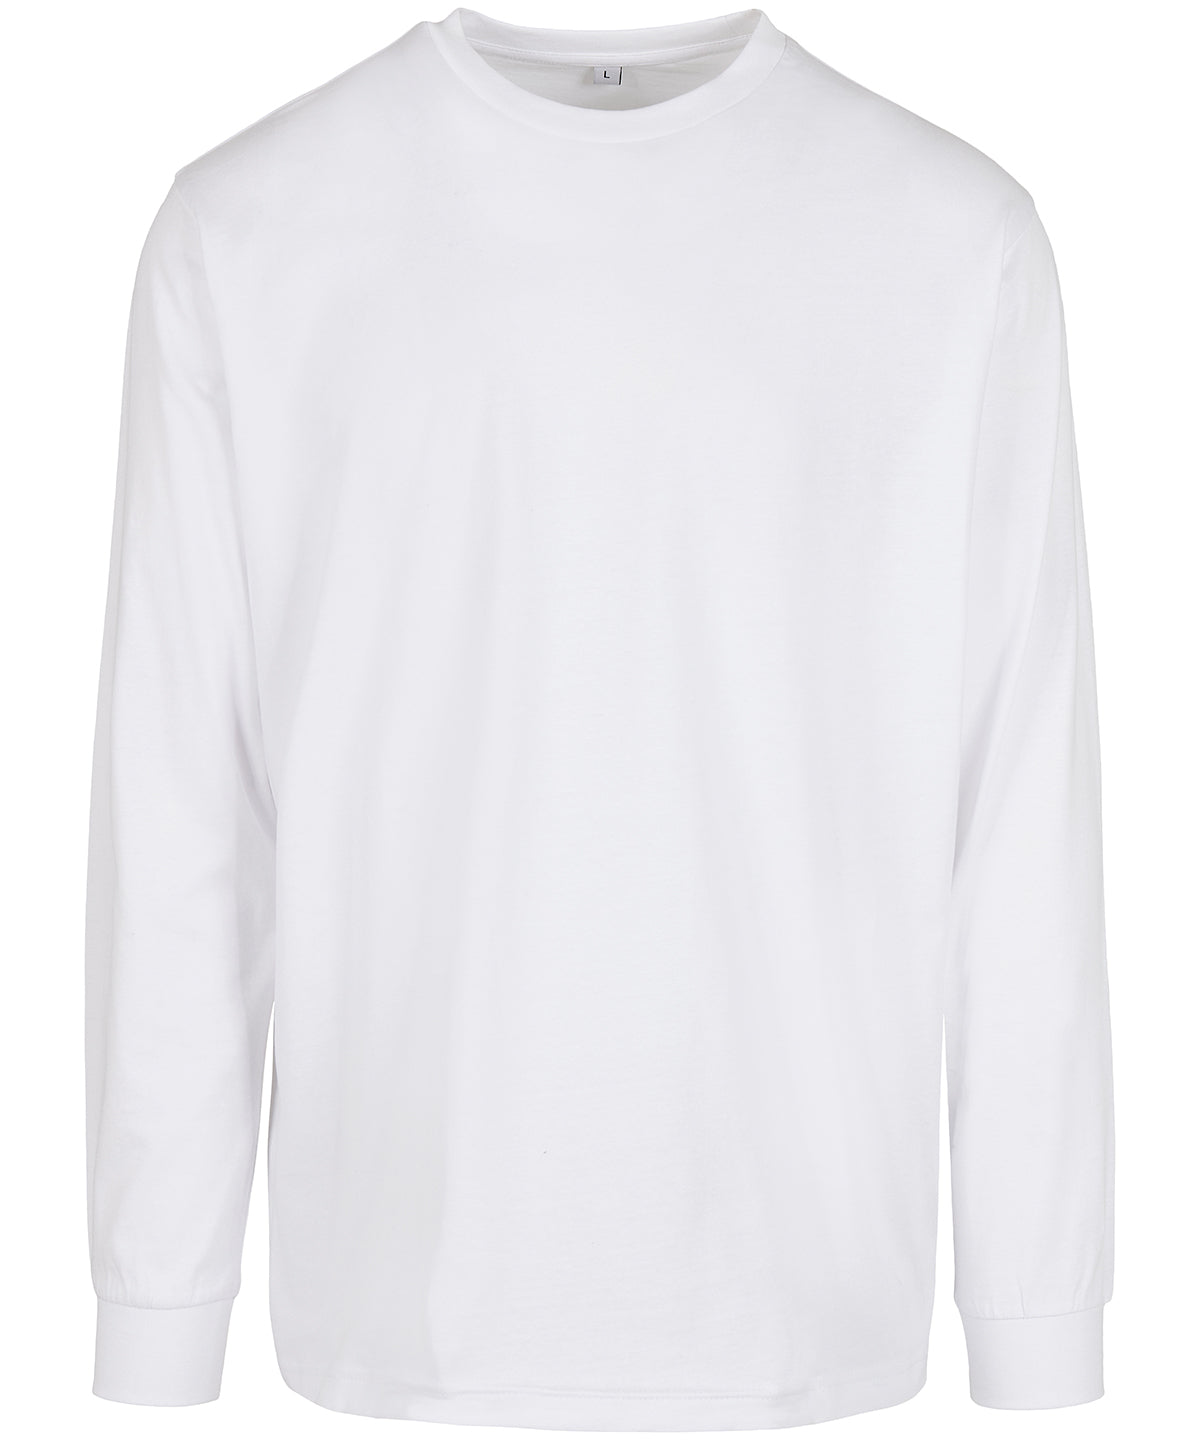 Personalised Sweatshirts - Black Build Your Brand Organic long sleeve with cuff rib